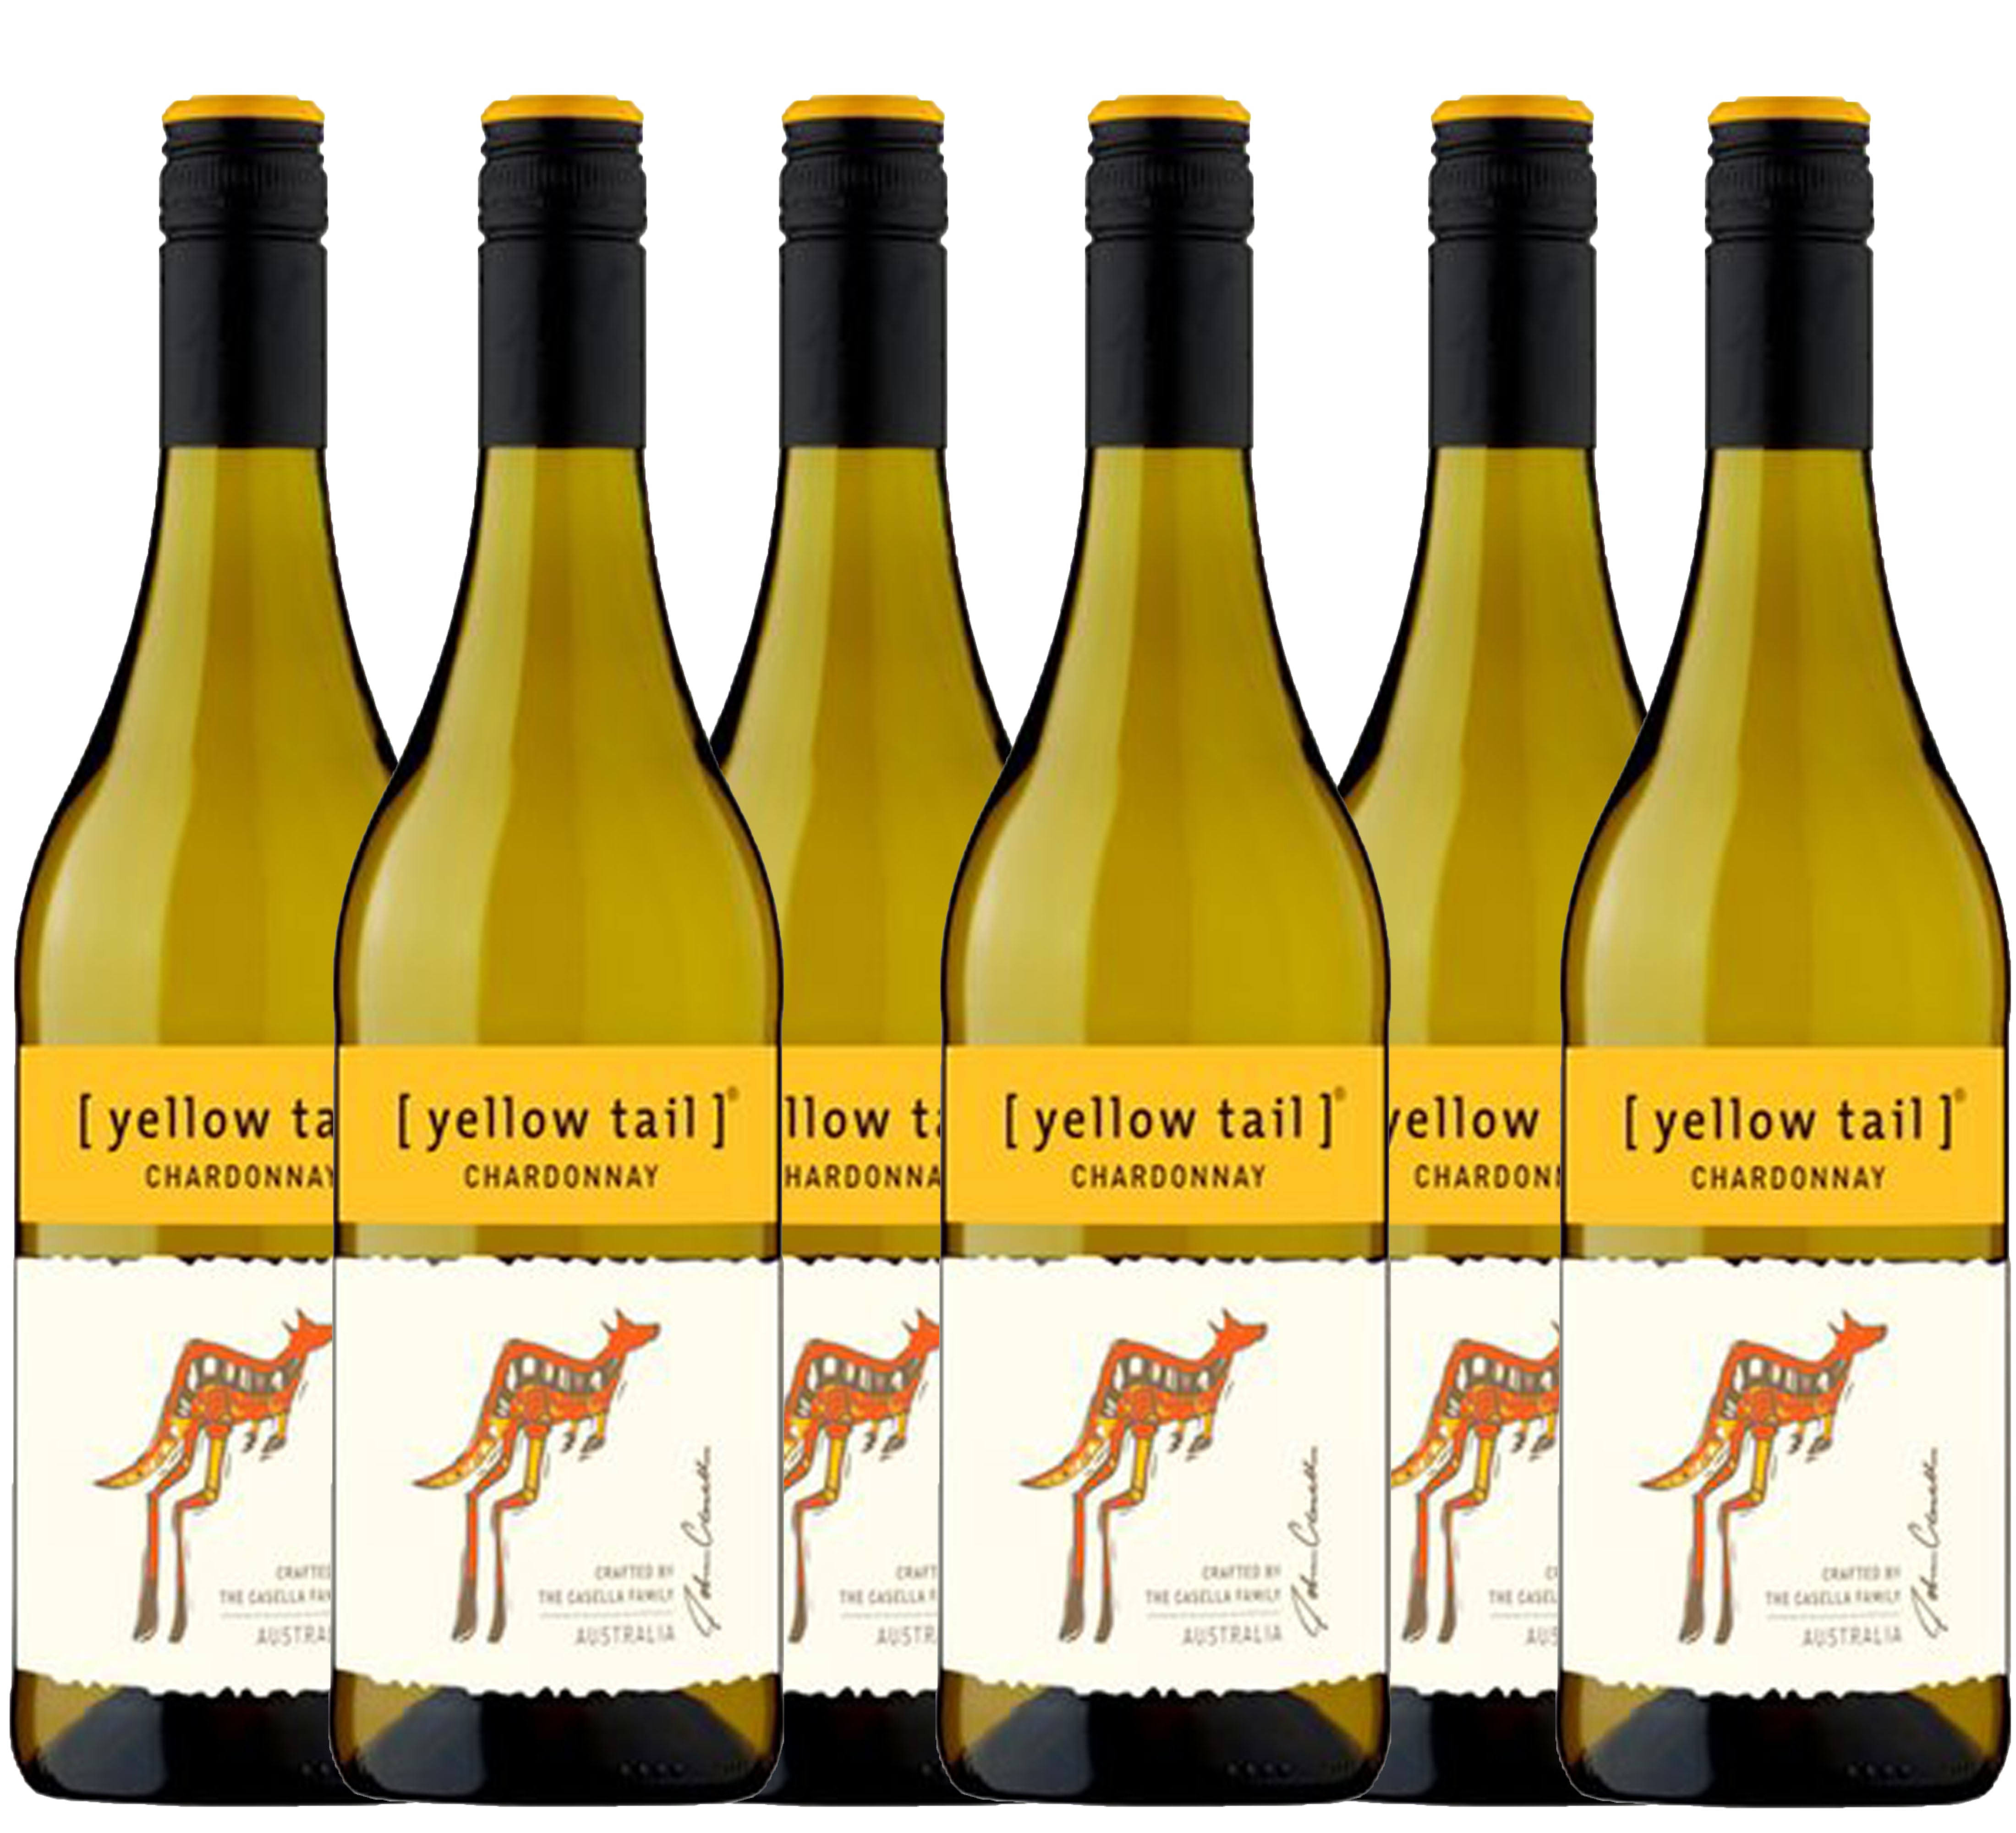 Yellow Tail Chardonnay - South Eastern Australia